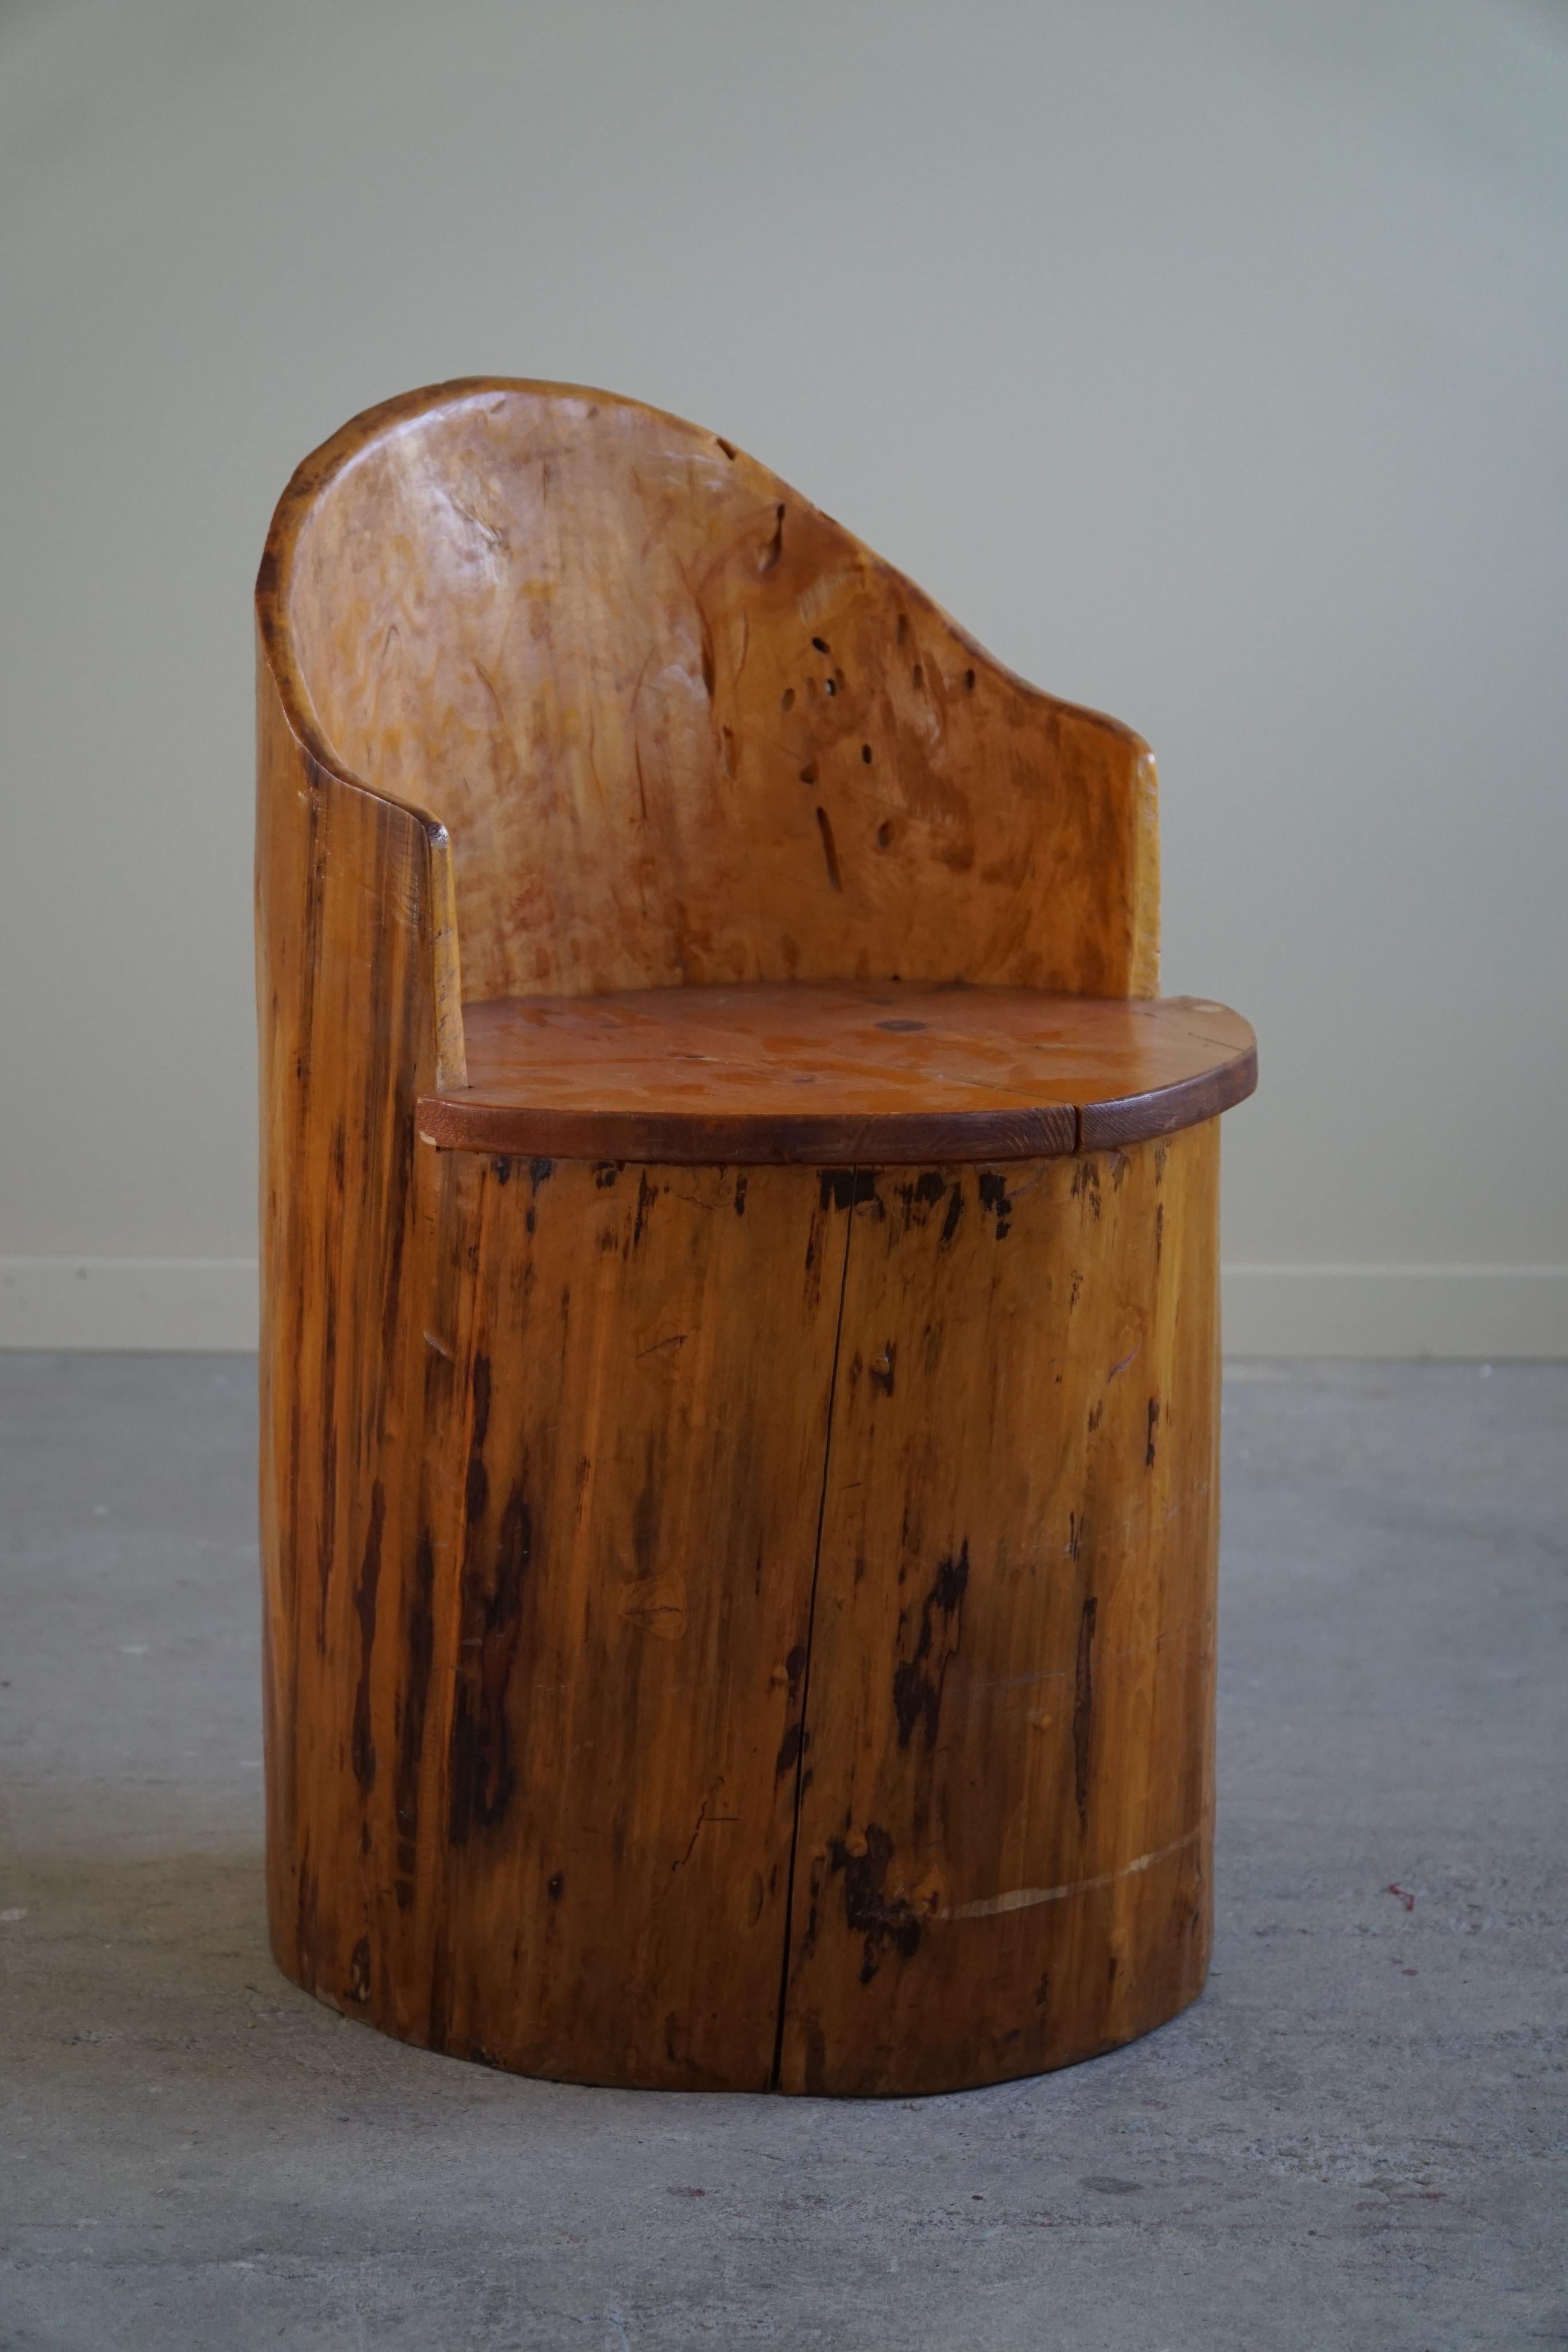 Primitive Stump Chair in Pine, Hand Carved, Swedish Modern, Wabi Sabi, 1960s For Sale 9